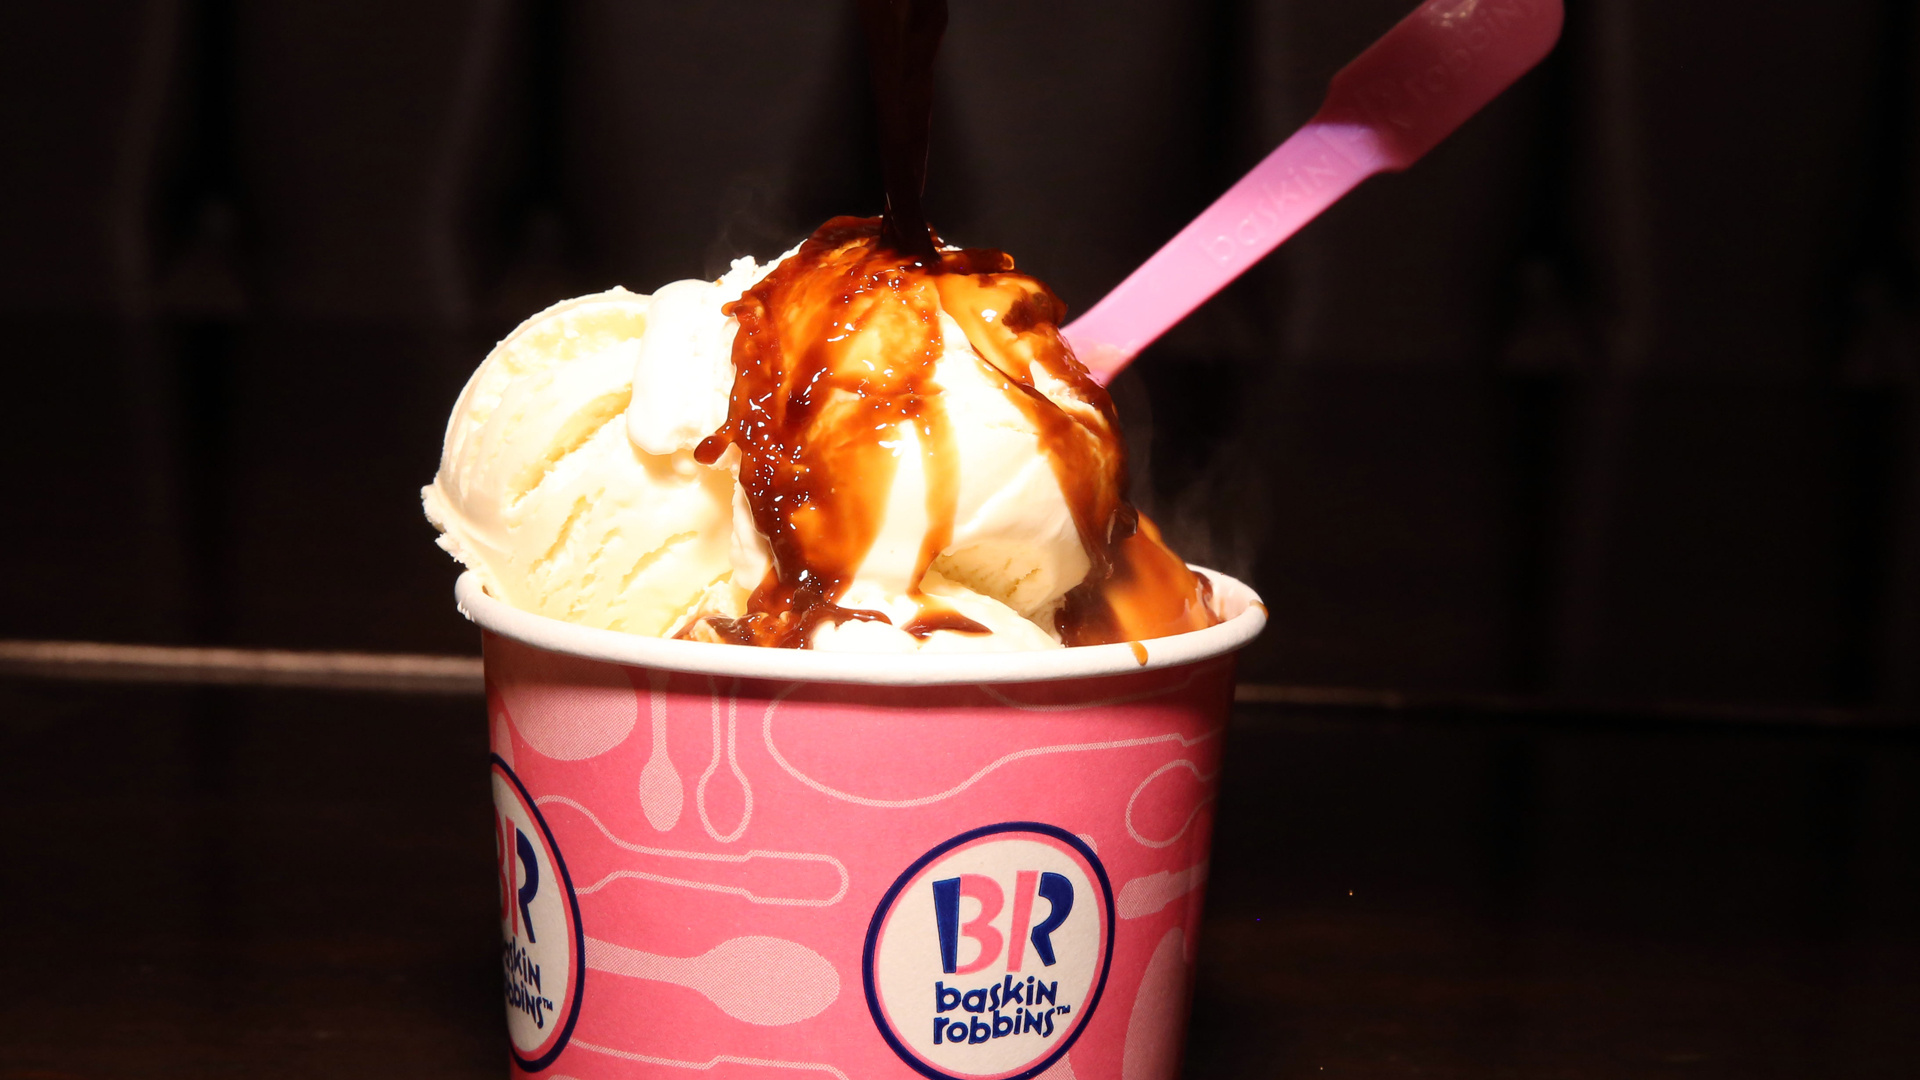 Baskin Robbins: Burton's Ice Cream Shop in Glendale, Over 1,000 flavors since 1945. 1920x1080 Full HD Wallpaper.